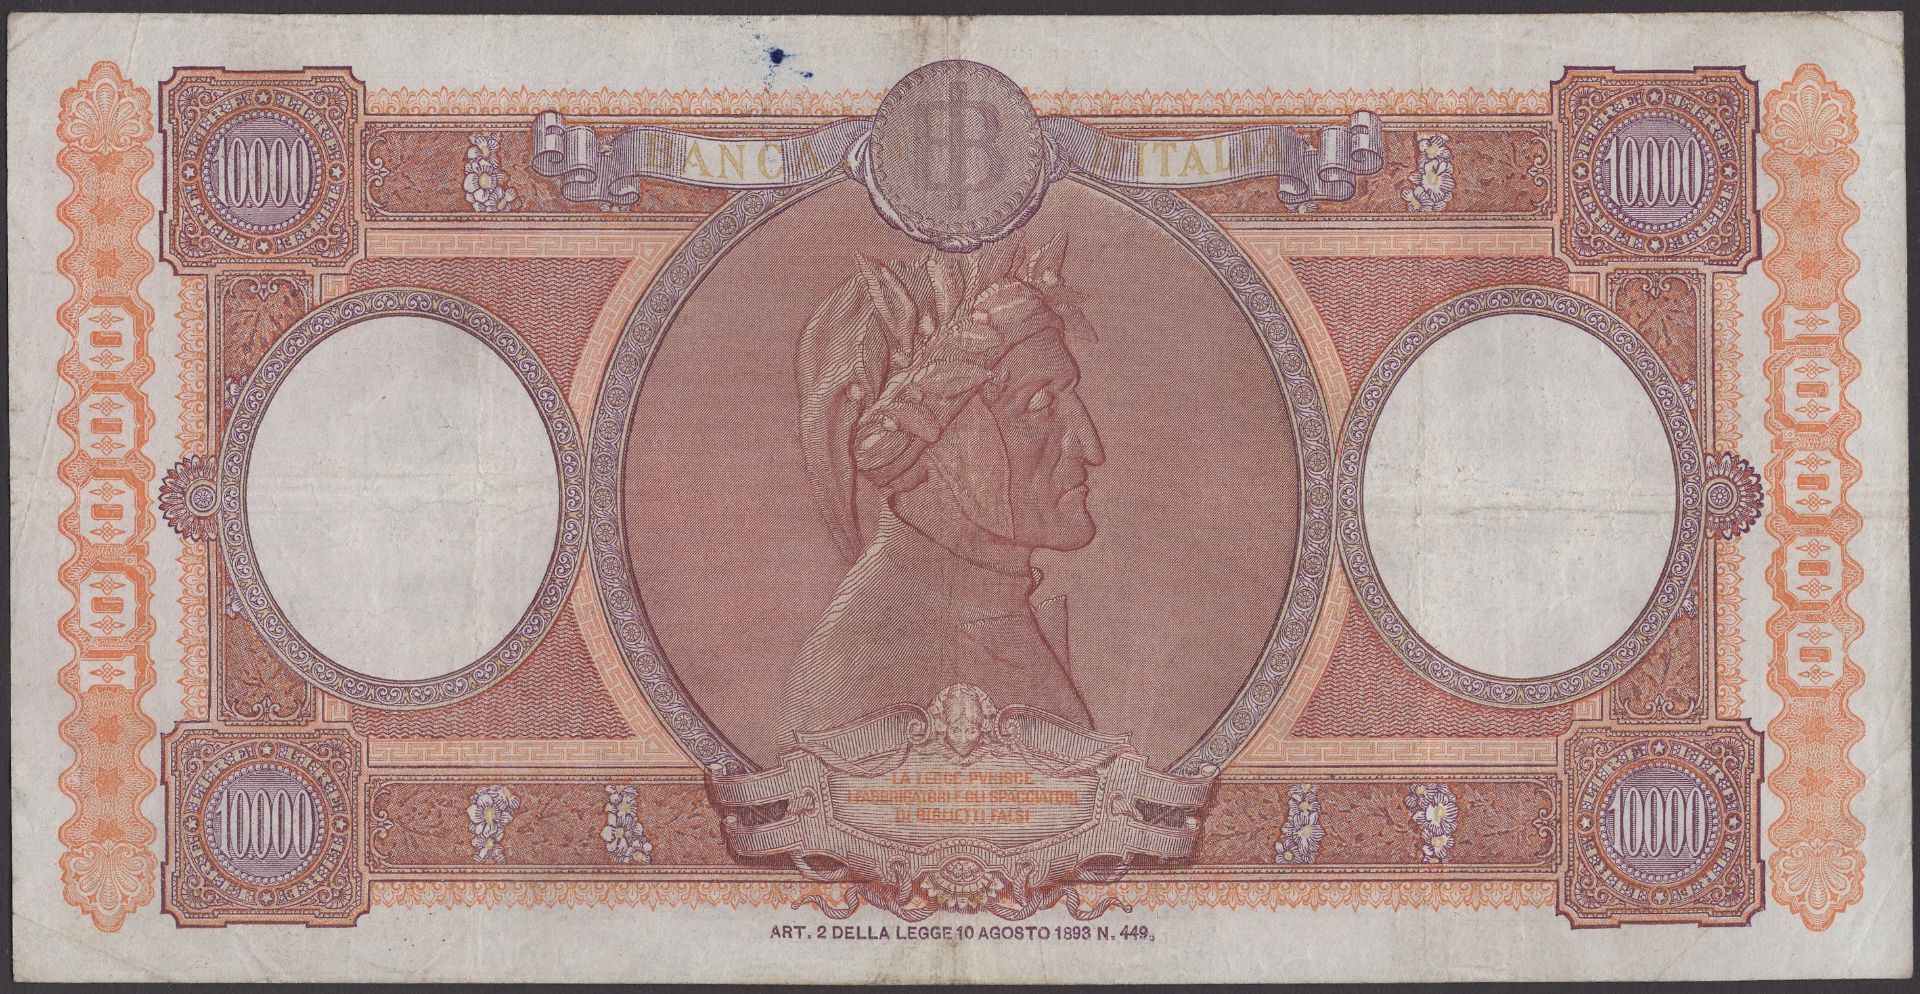 Banca d'Italia, 10,000 Lire, 2 January 1961, serial number R 2055 7958, Carli-Ripa signature... - Image 2 of 2